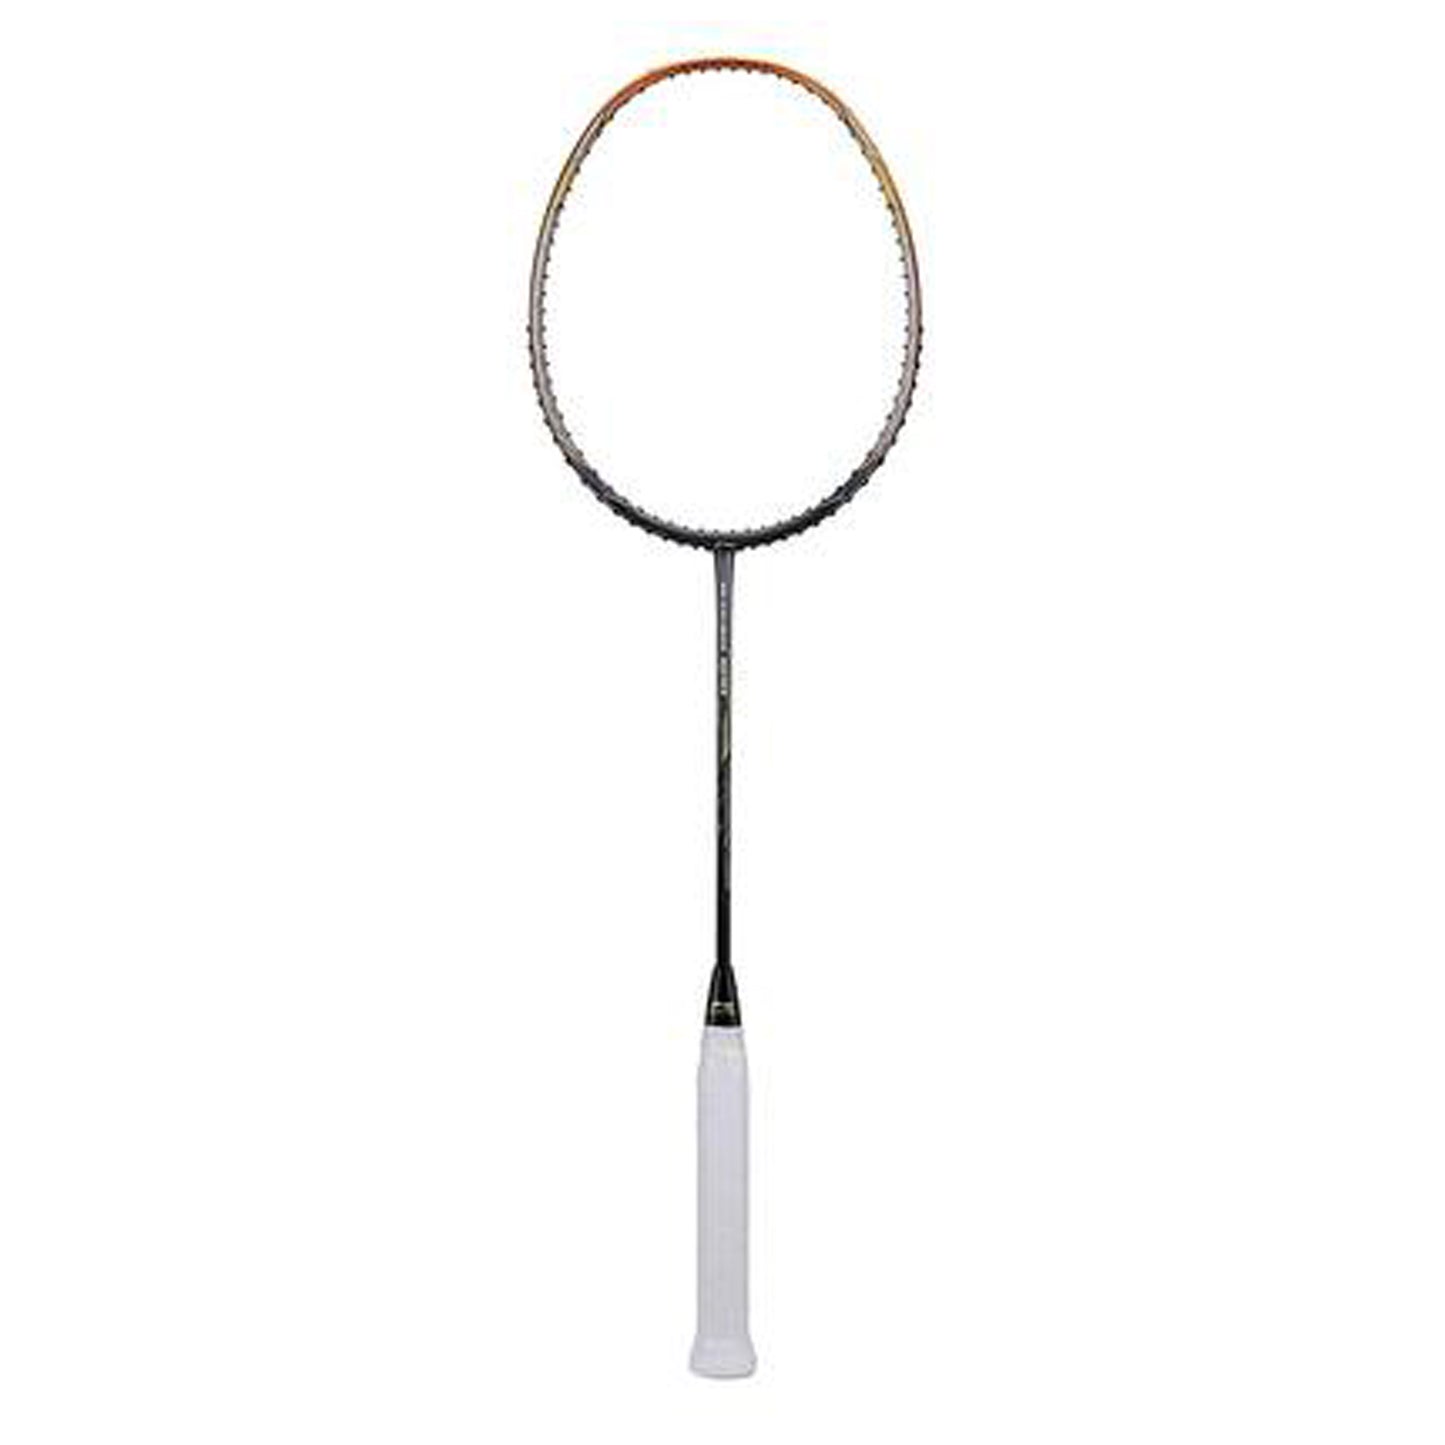 Li-Ning 3D CALIBAR 600 Carbon-Fiber Unstrung Badminton Racquet - Best Price online Prokicksports.com